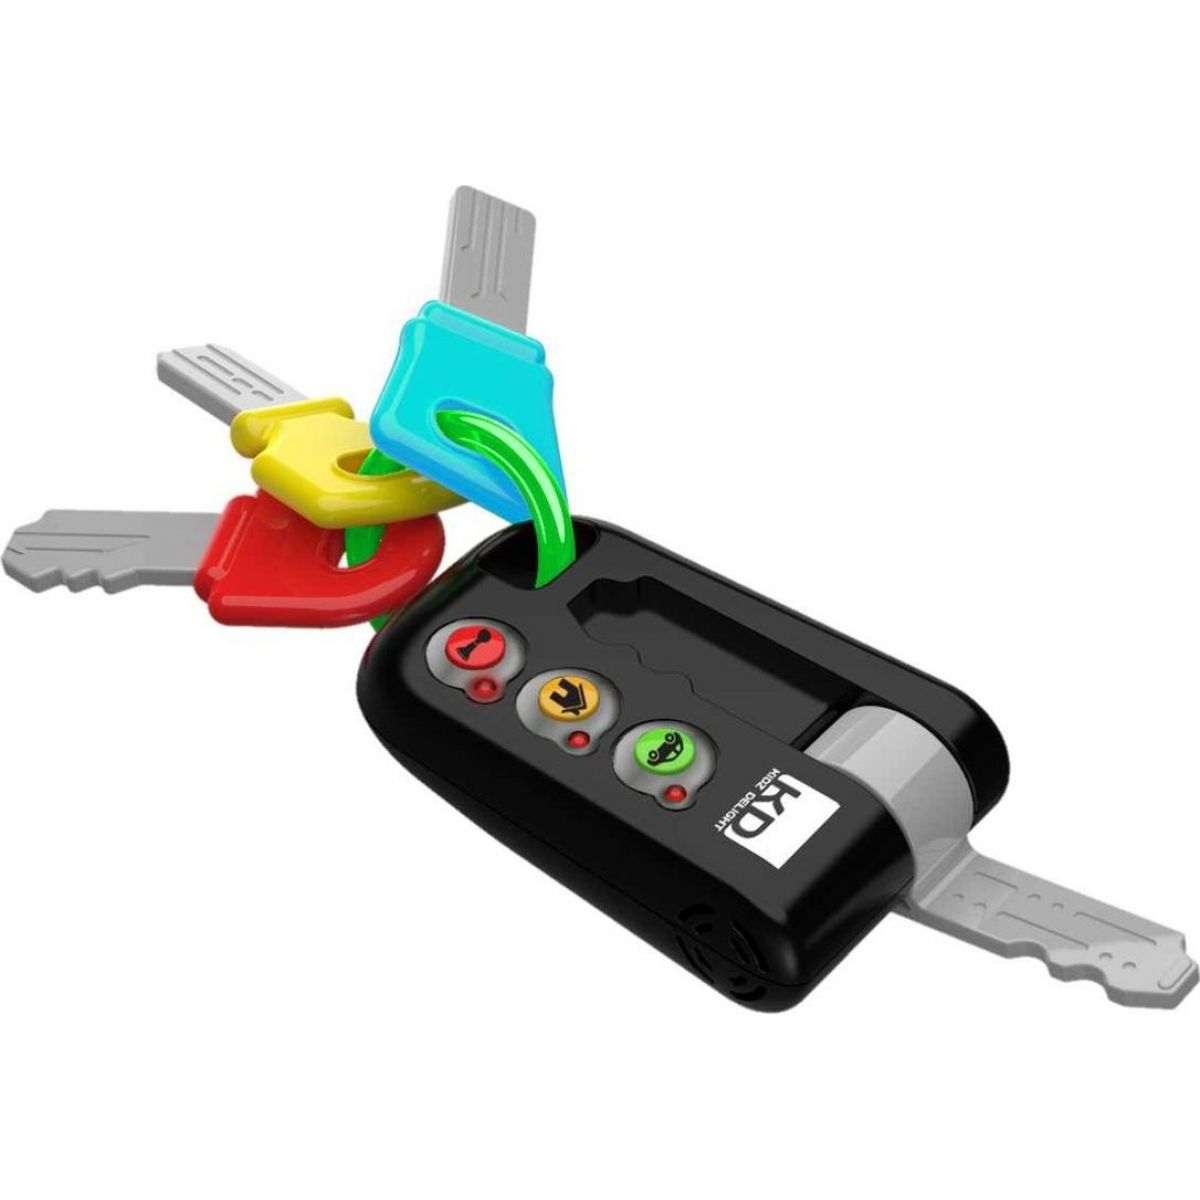 Tech Too Kľúče od auta Kooky